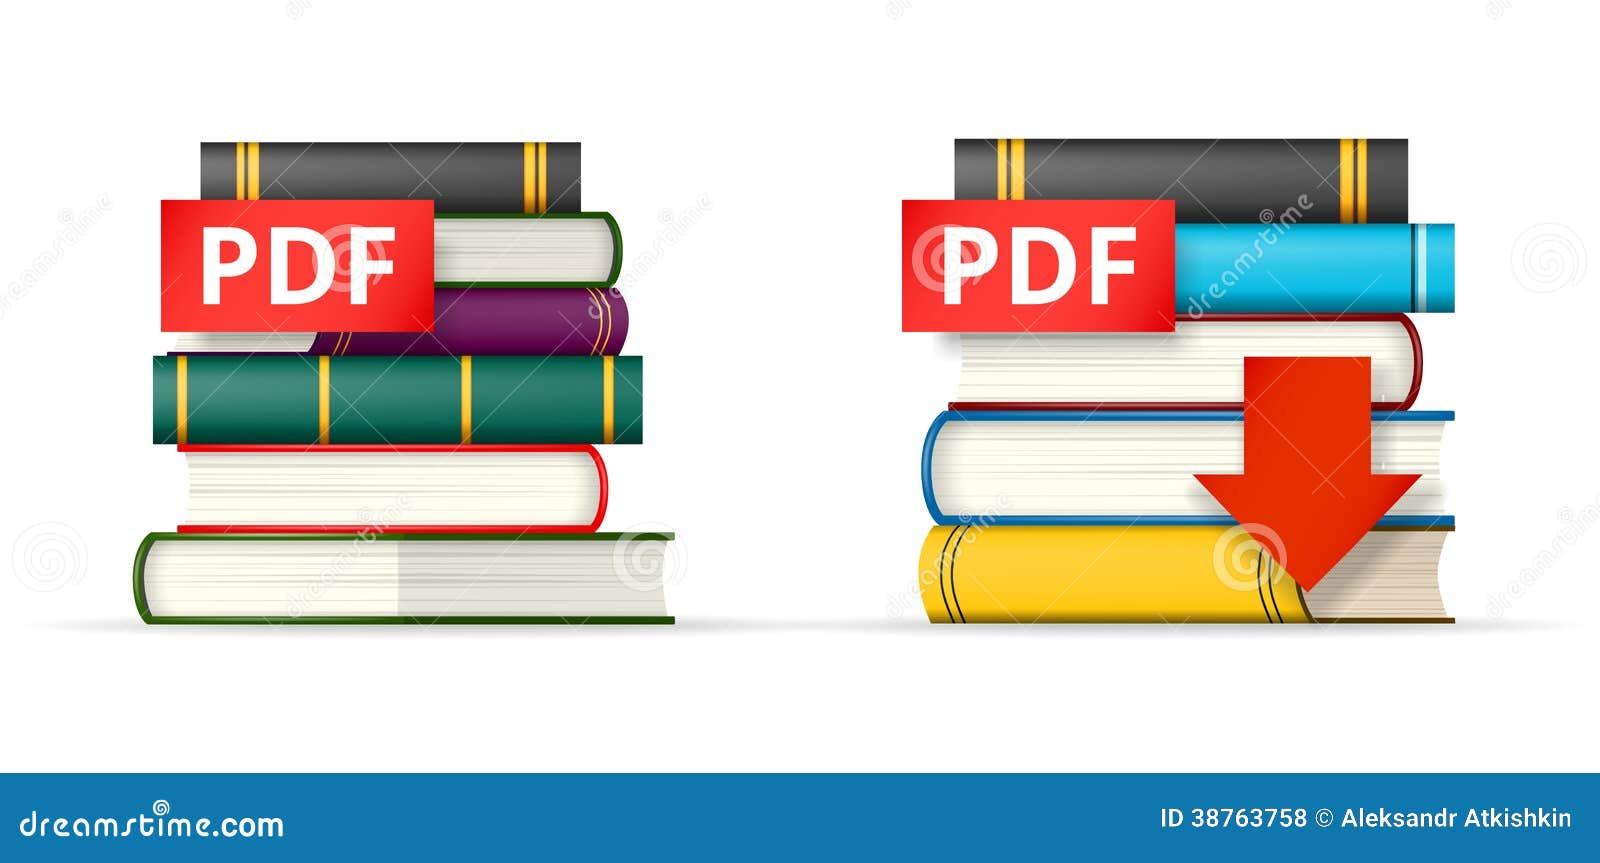 d&d 3.5 books pdf direct download